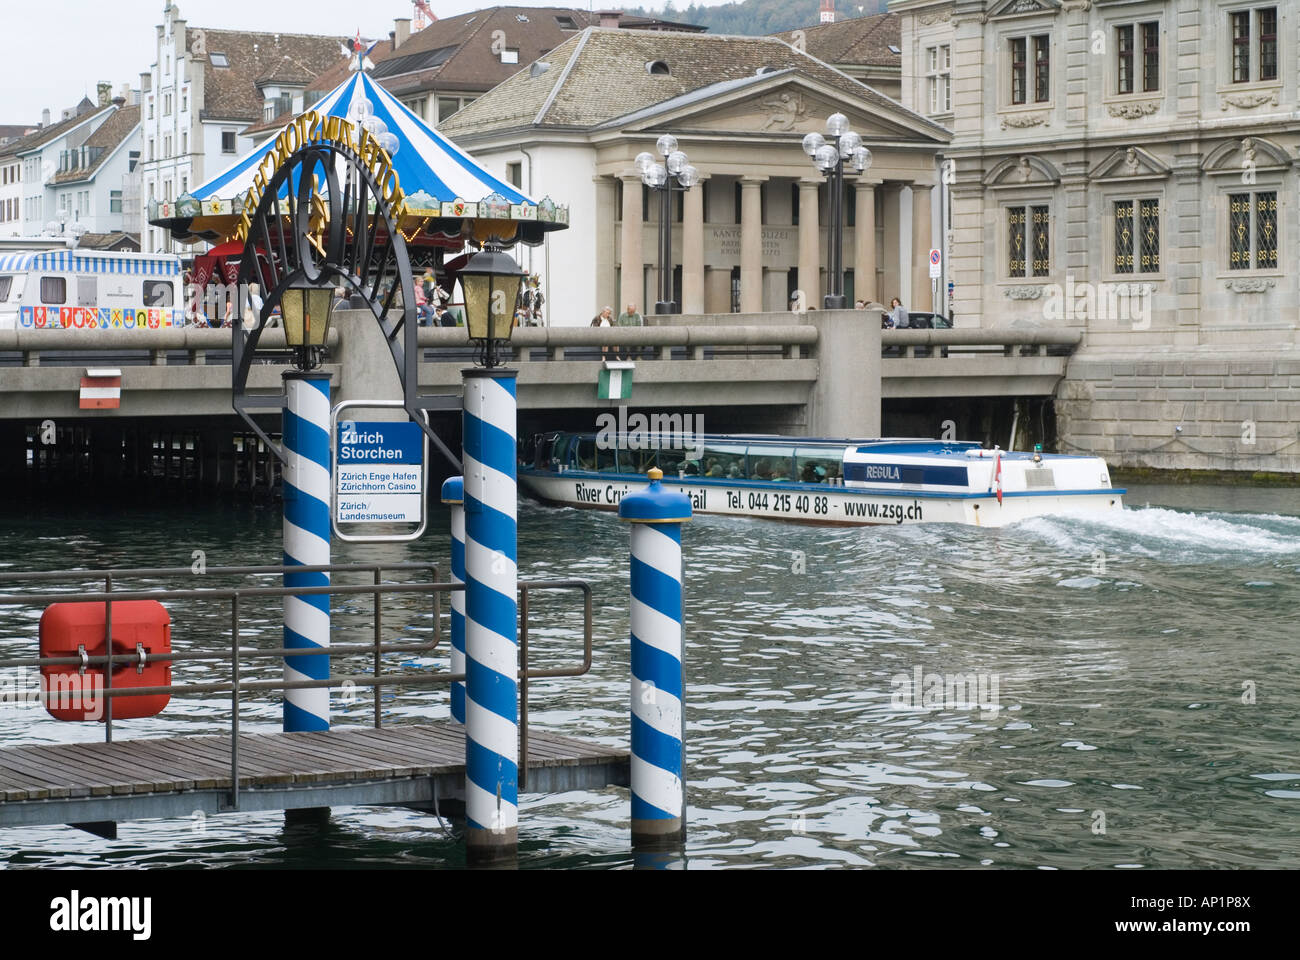 Limmat River in Zurich, Switzerland with dock of the Hotel zum Storchen and sightseeing boat. Stock Photo